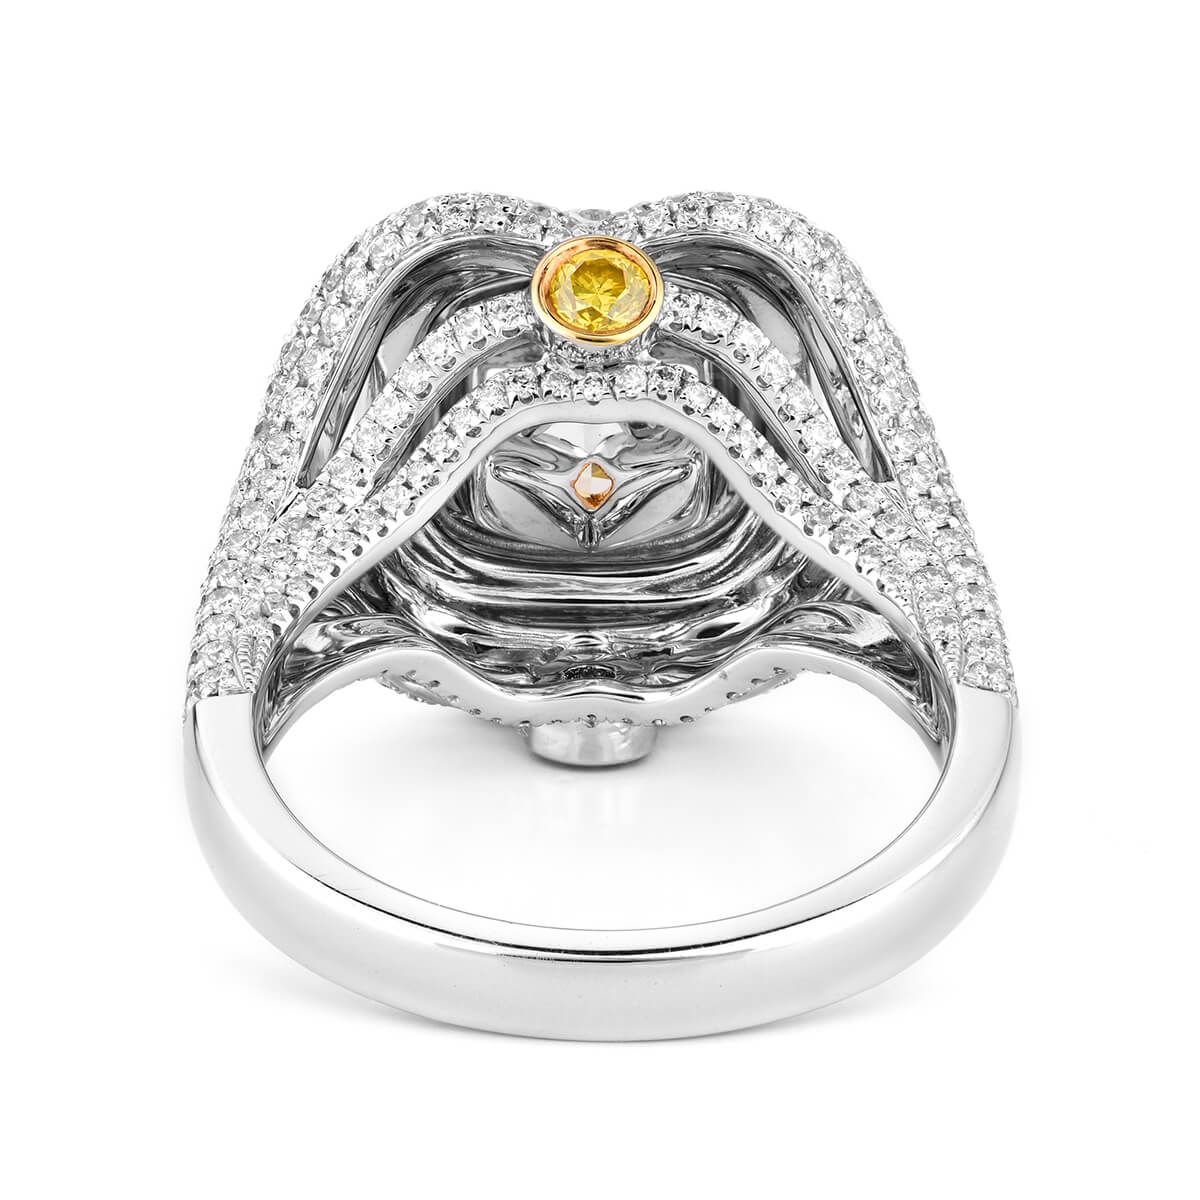 Light Yellow (W-X) Diamond Ring, 2.02 Ct. (3.74 Ct. TW), Cushion shape, GIA Certified, 7273277684